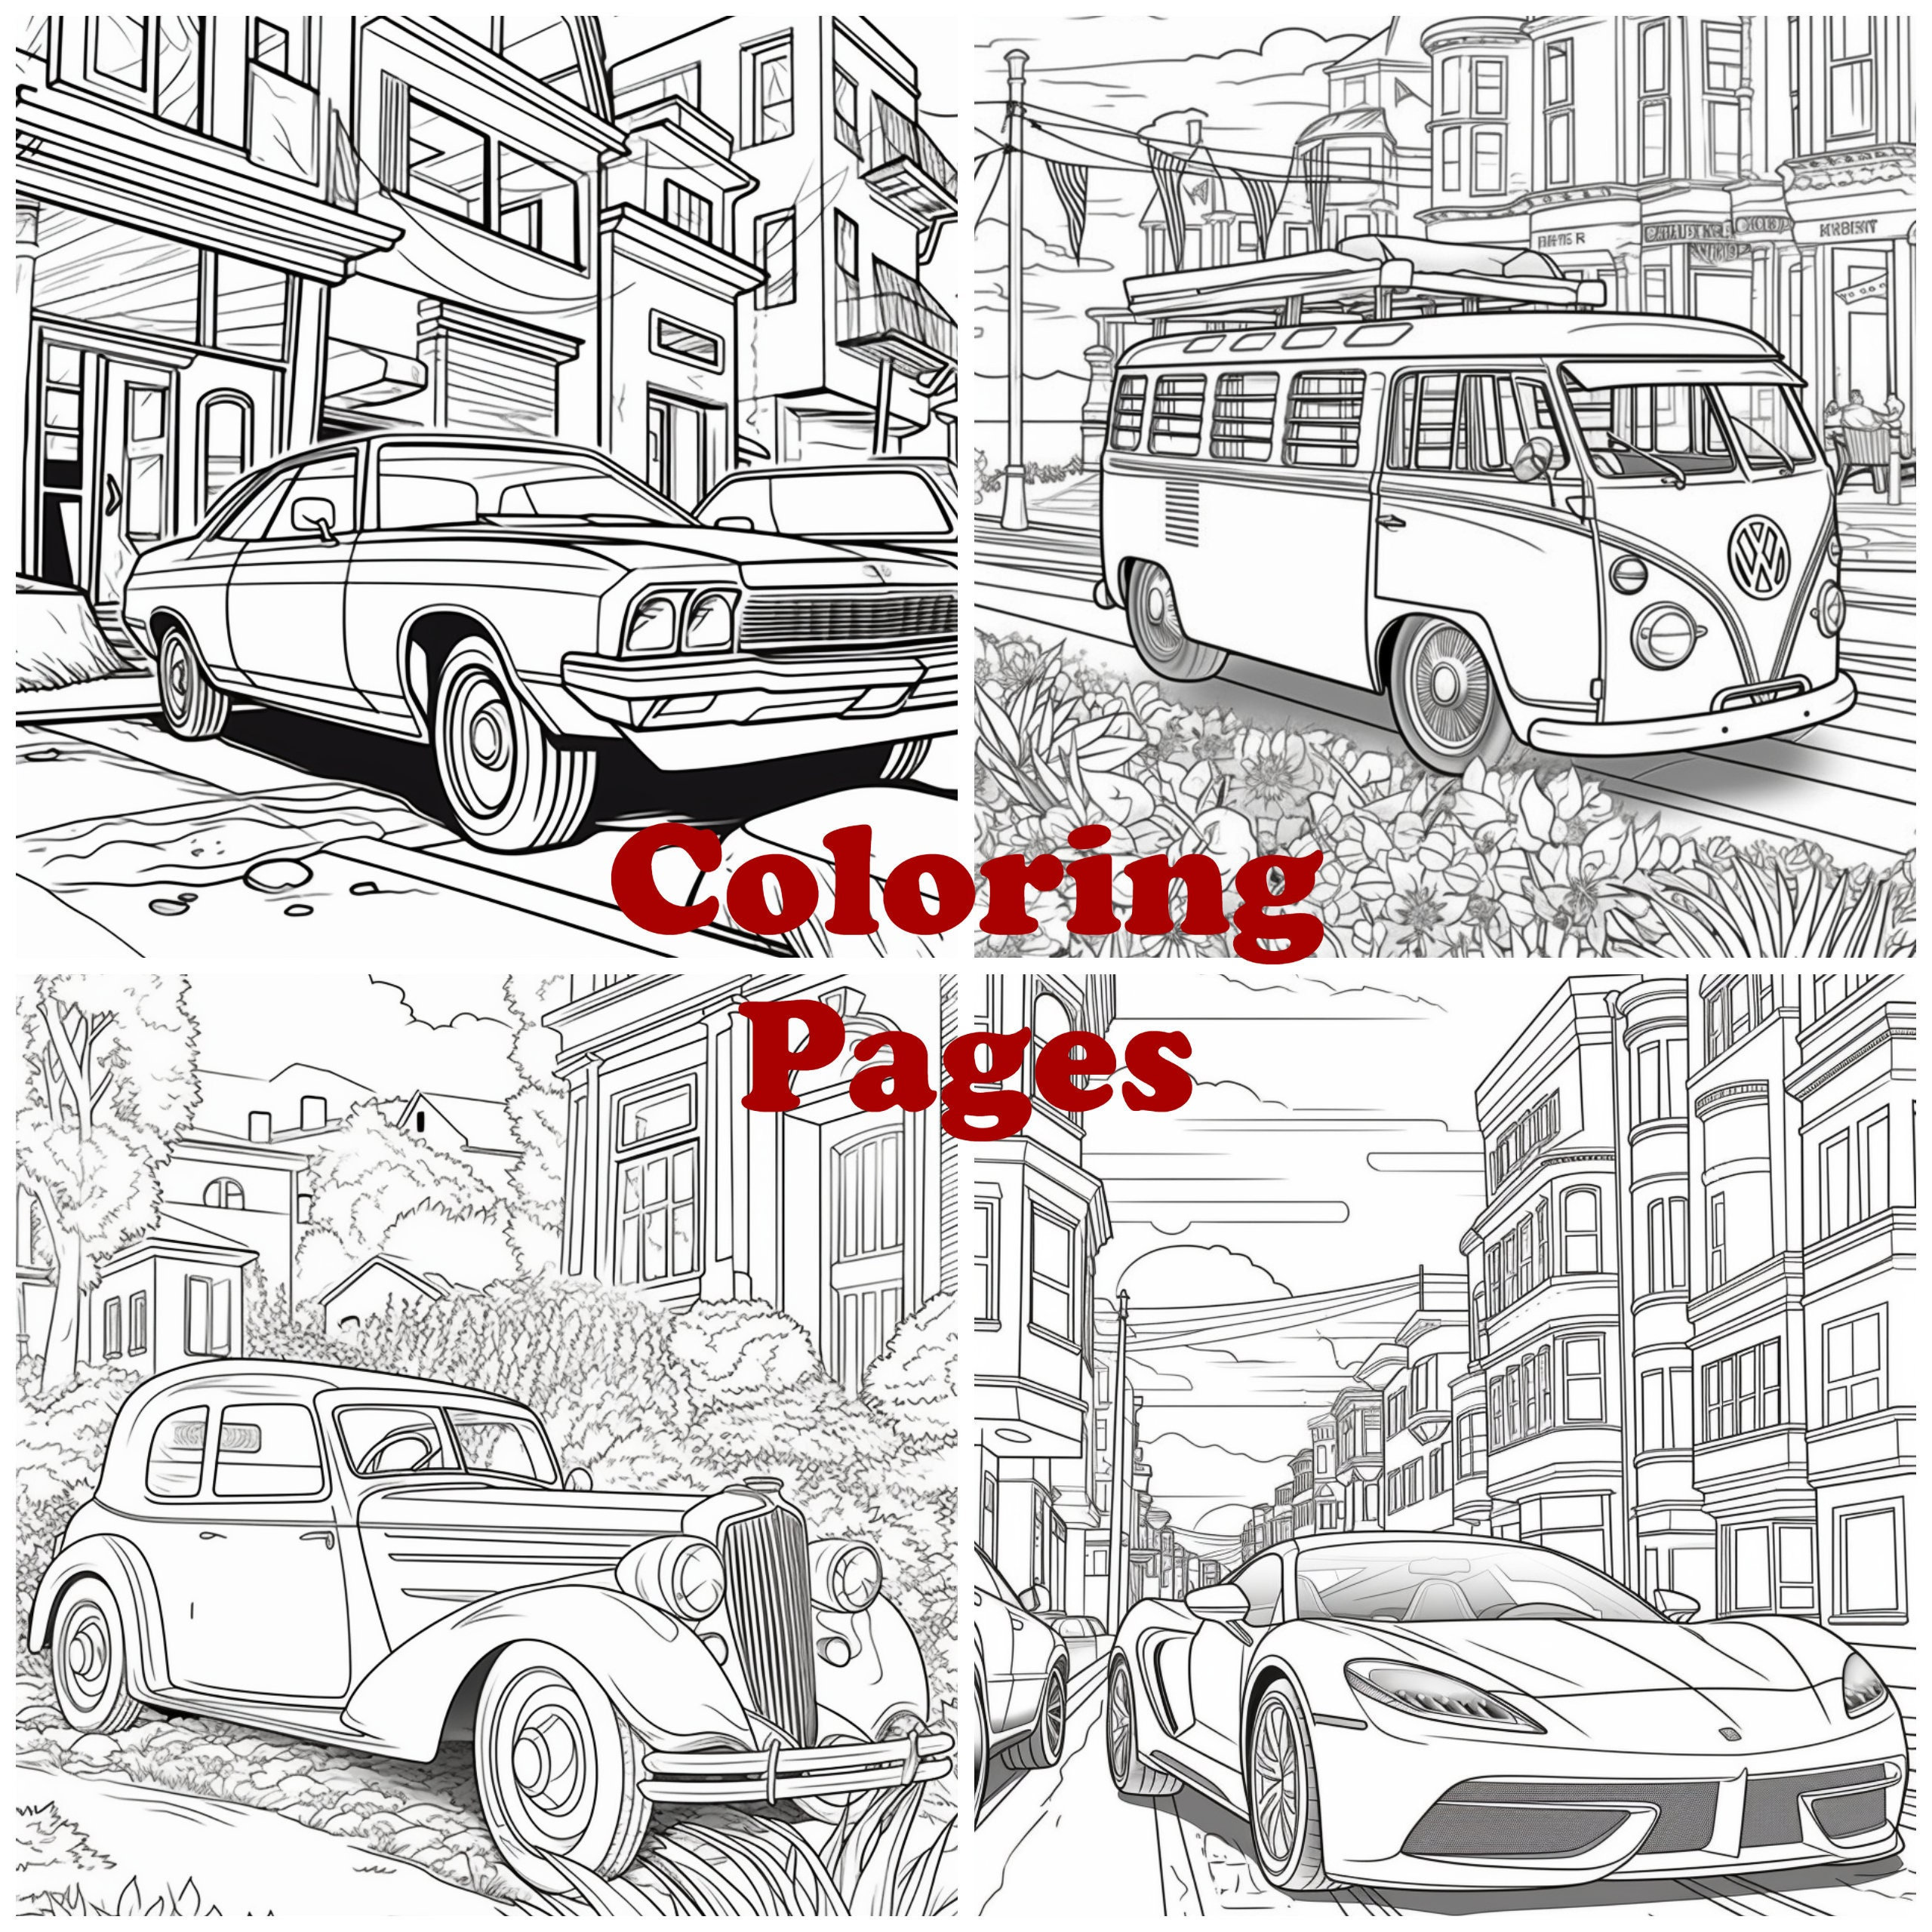 Car coloring pages car coloring sheets classic cars car art car coloring book